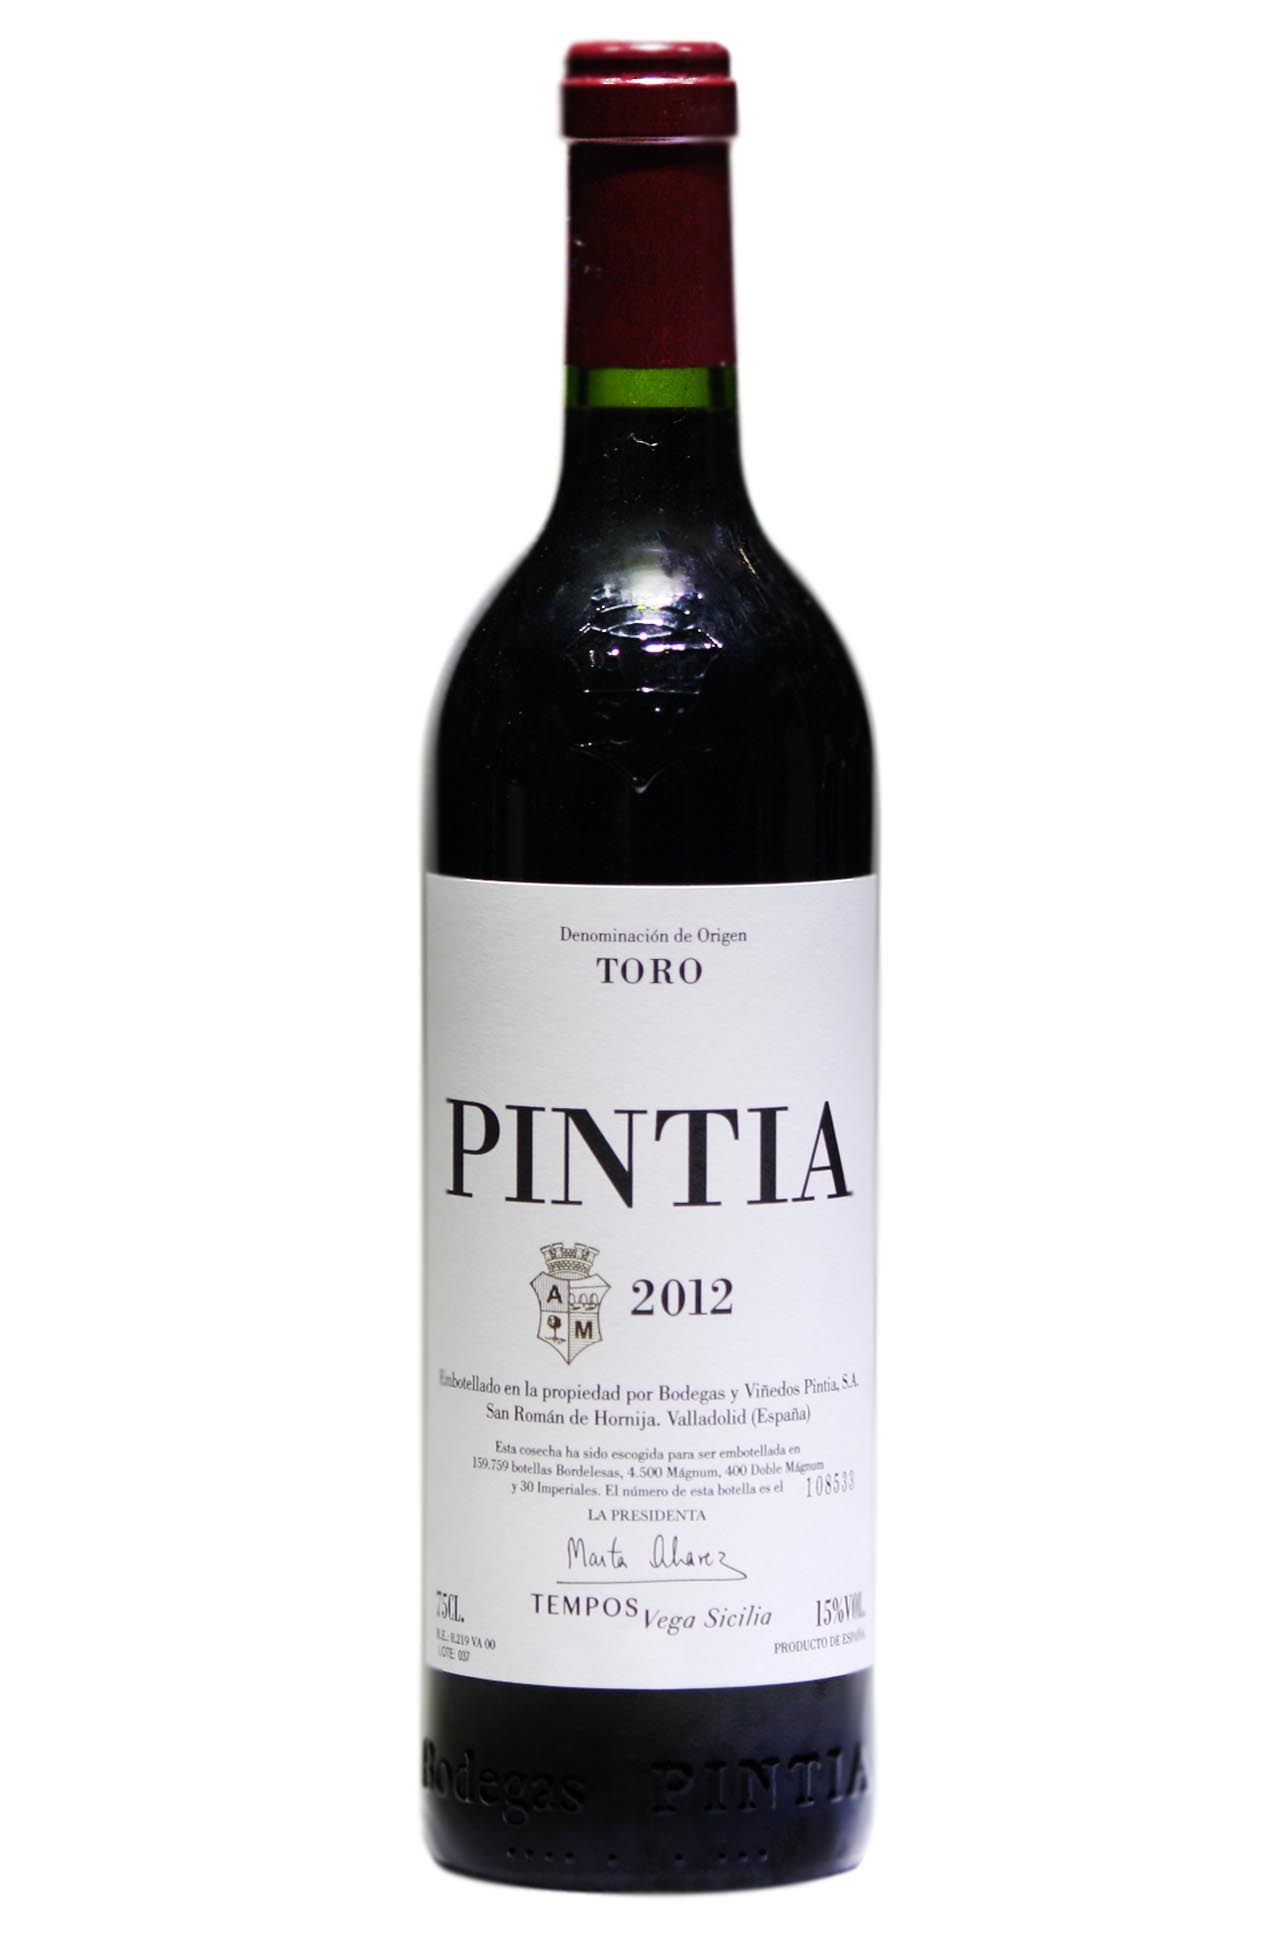 Pintia red wine